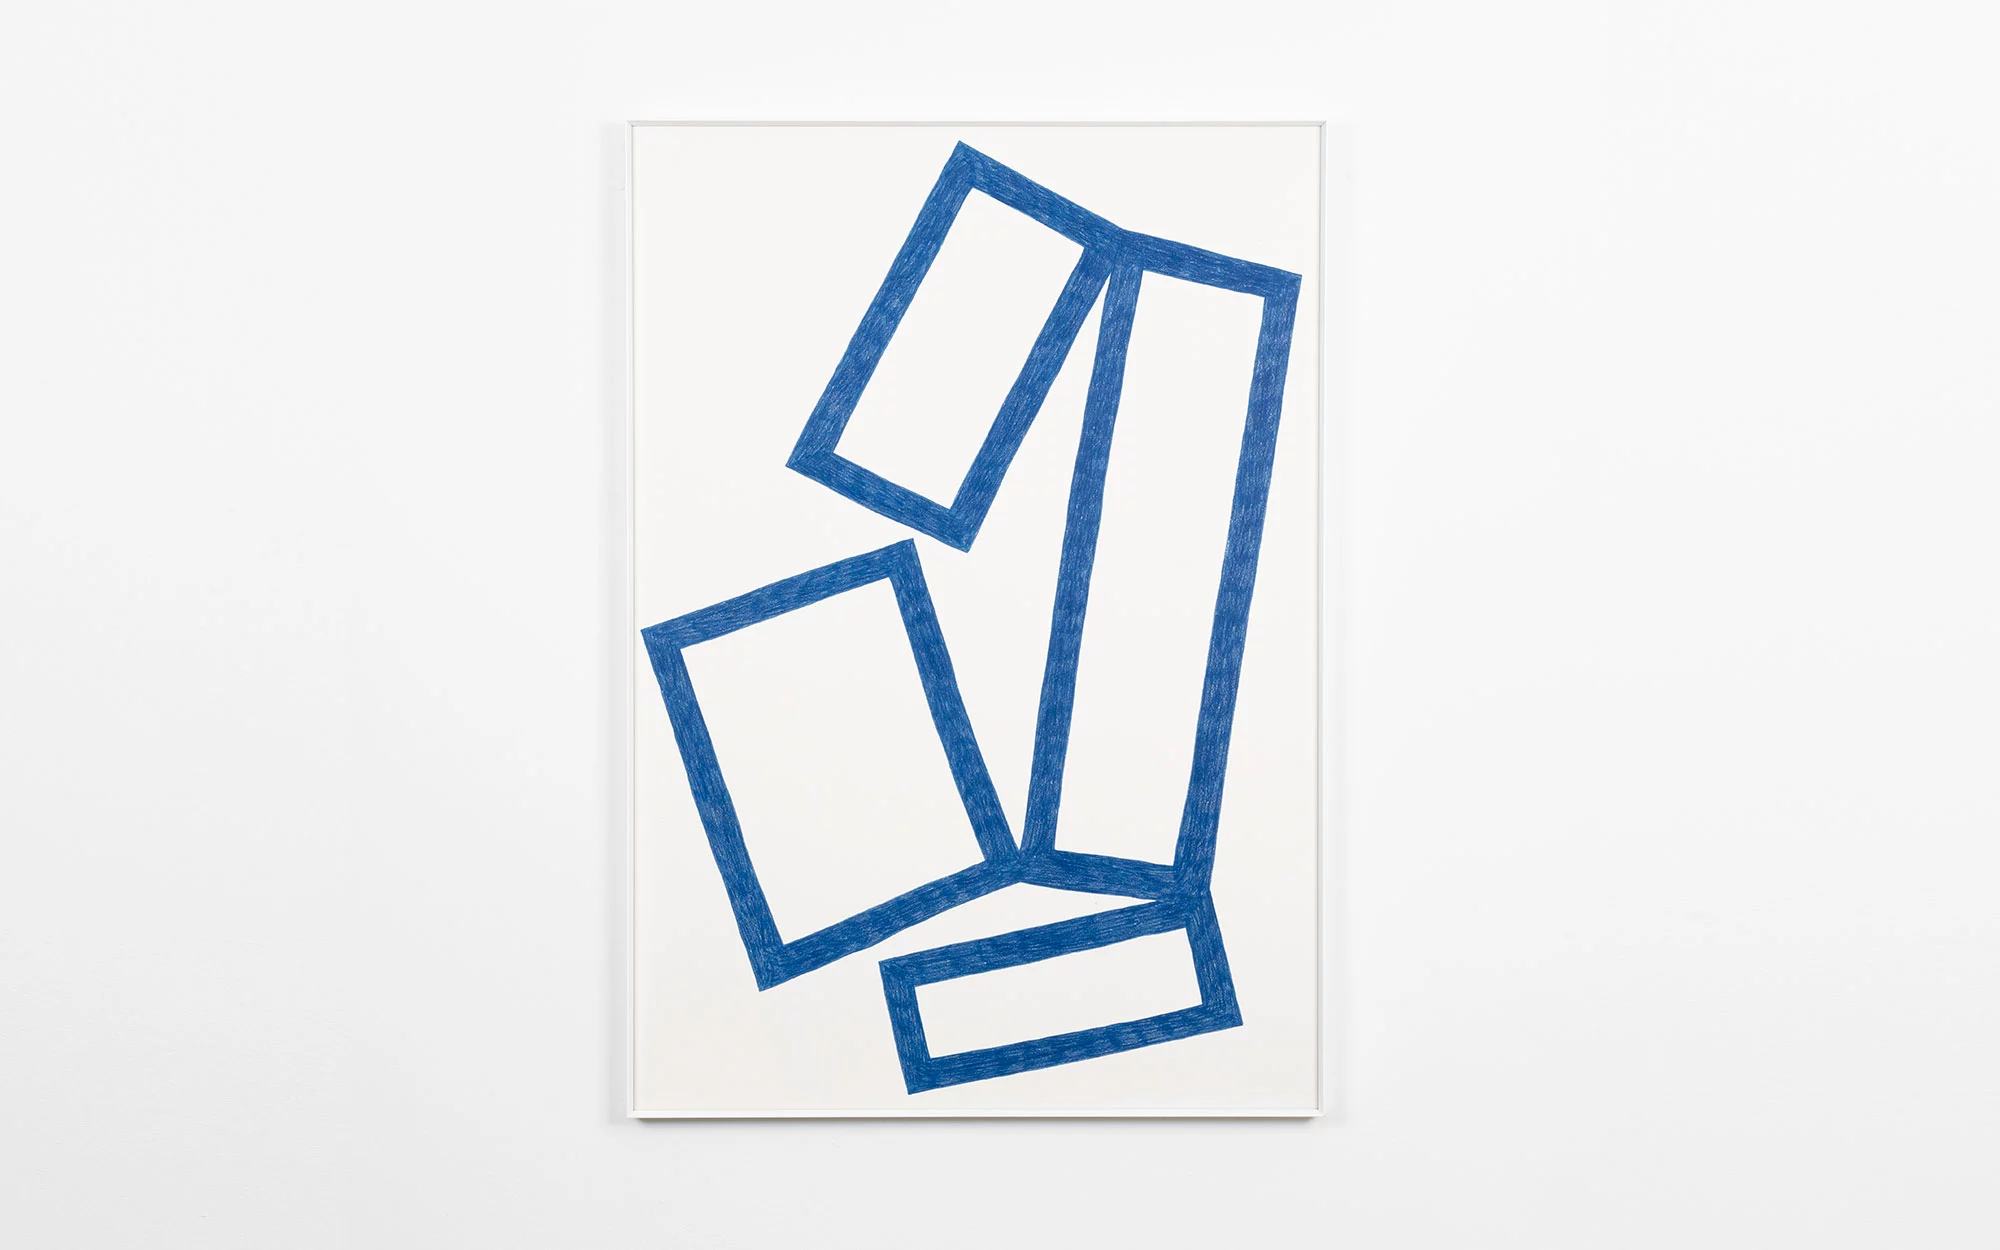 Cubes Drawings - Pierre Charpin - Pendant light - Galerie kreo